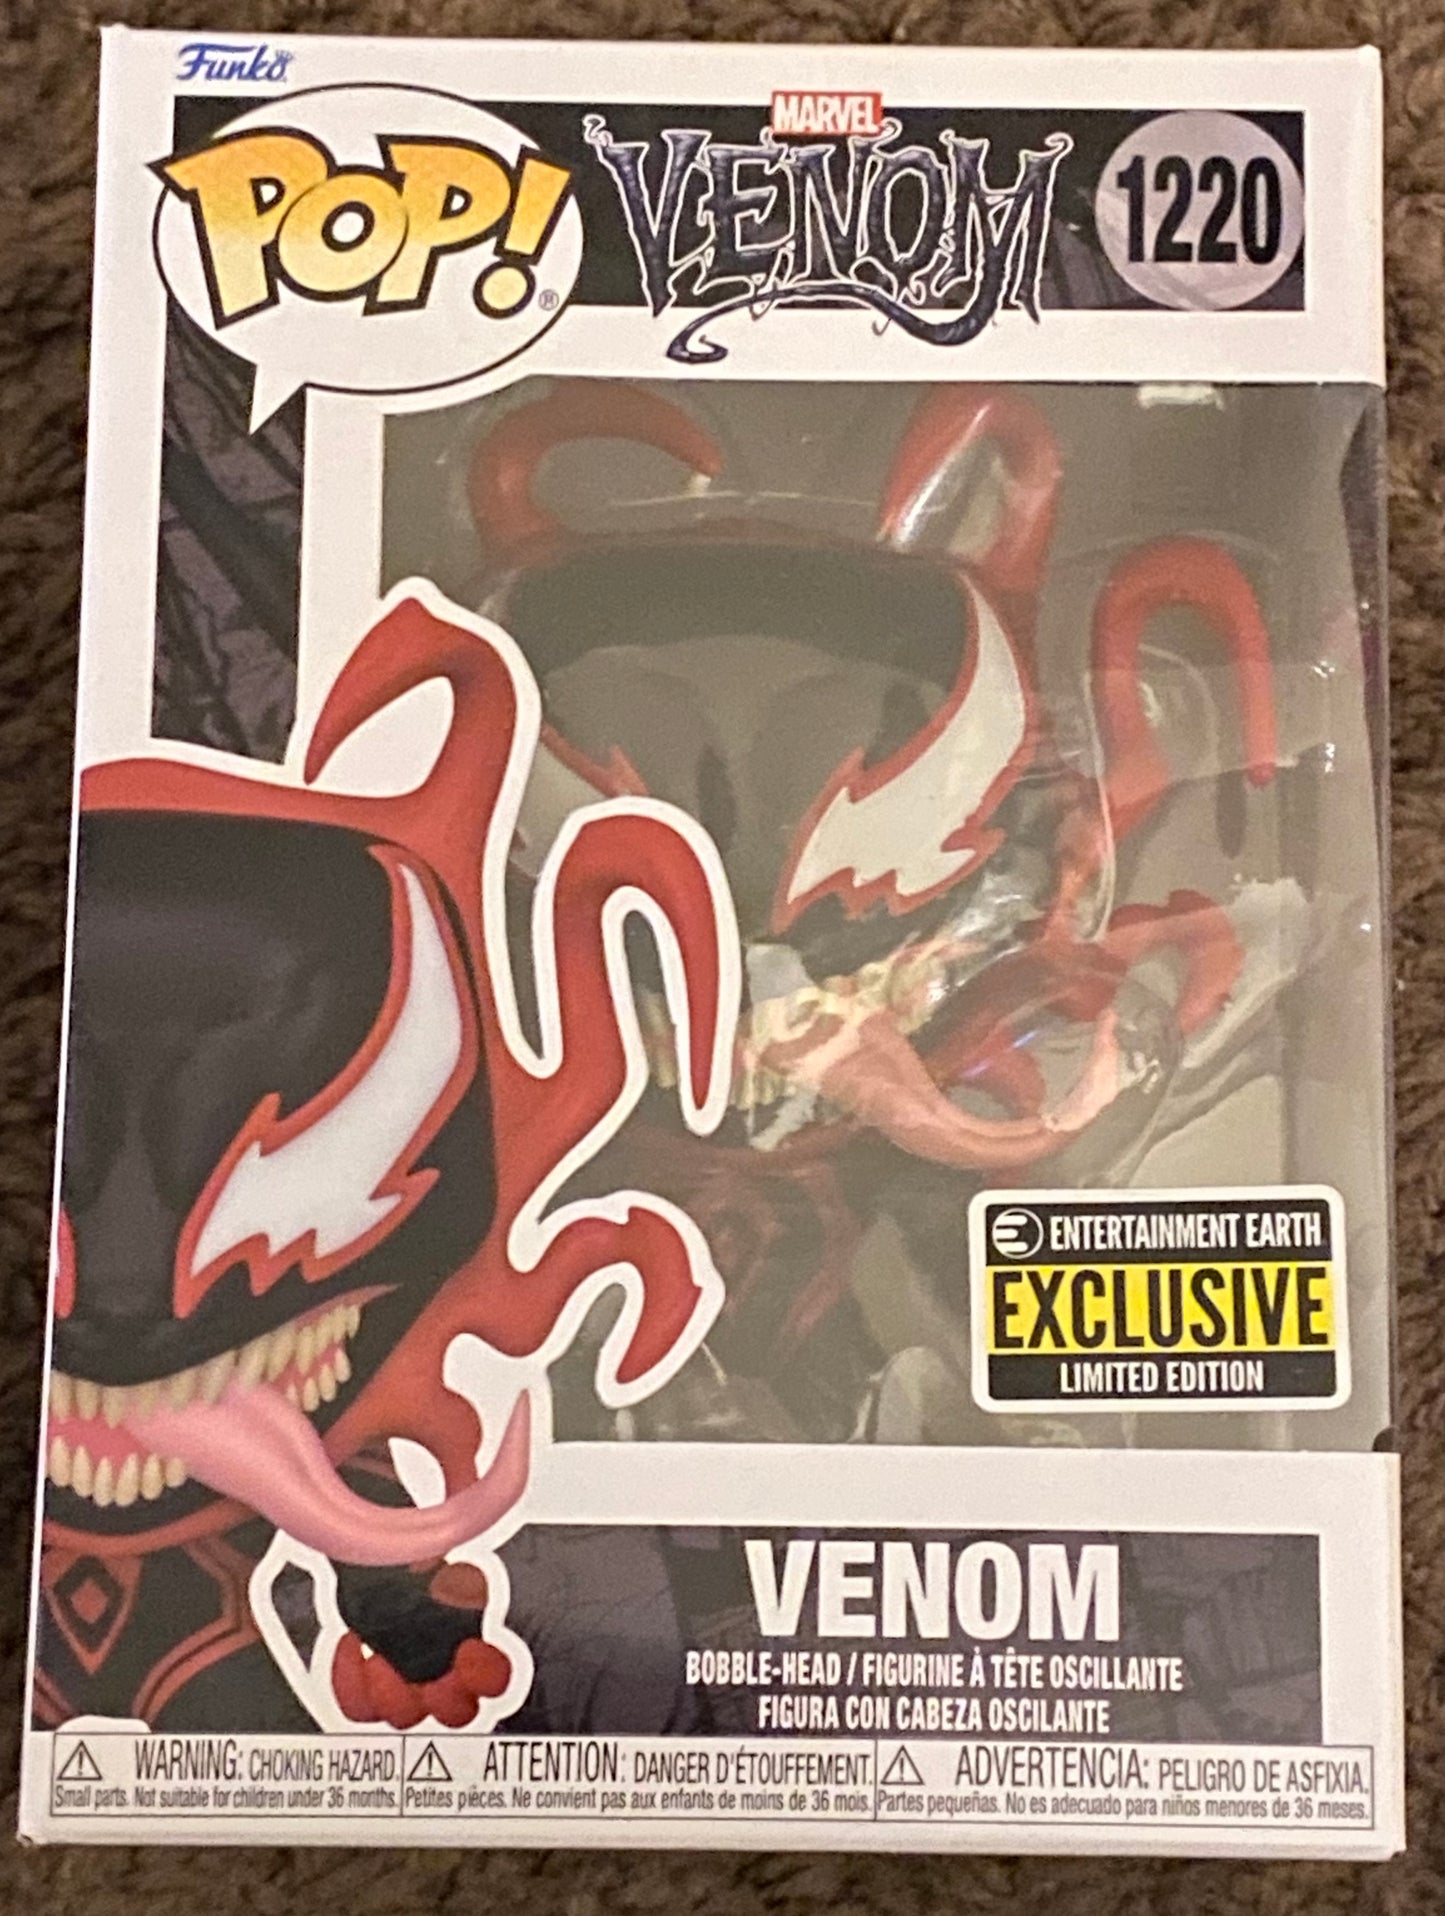 Funko Pop Venom EE Exclusive #1220